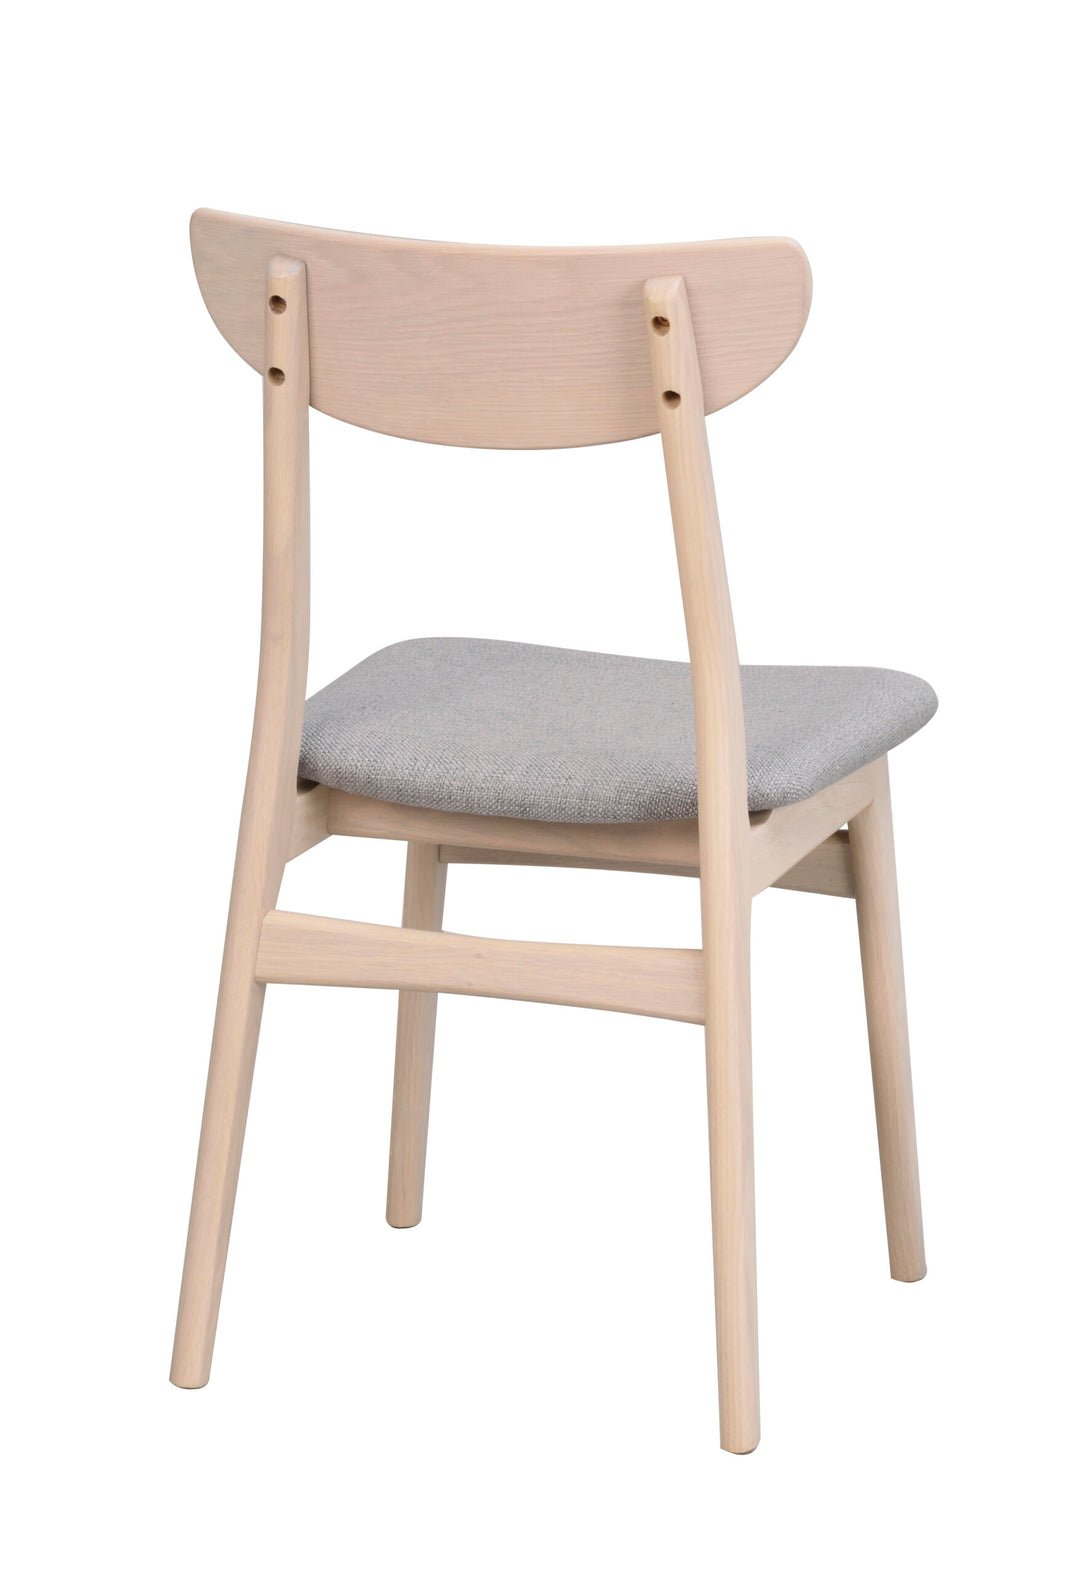 120066_d, Rodham chair, whitepigm. oak_grey